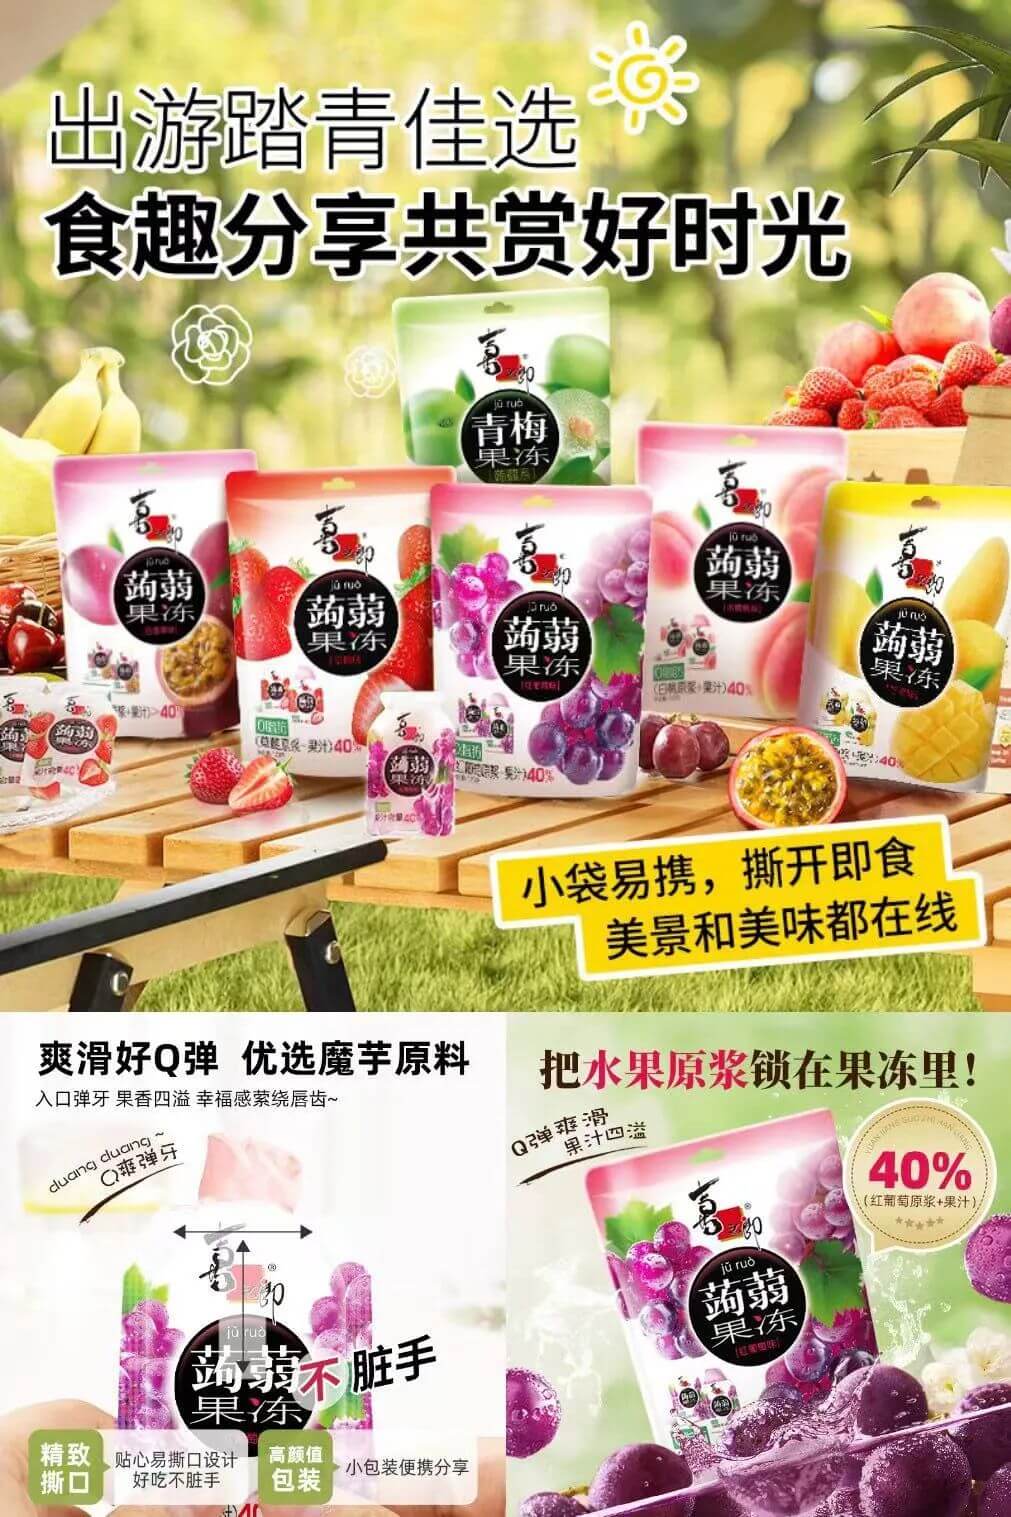  665361aecce76 - [1.9 yuan] Infinite Snack+Okamoto+Shaqima+Jelly+Tencent vip+Sunscreen Spray+Antiperspirant